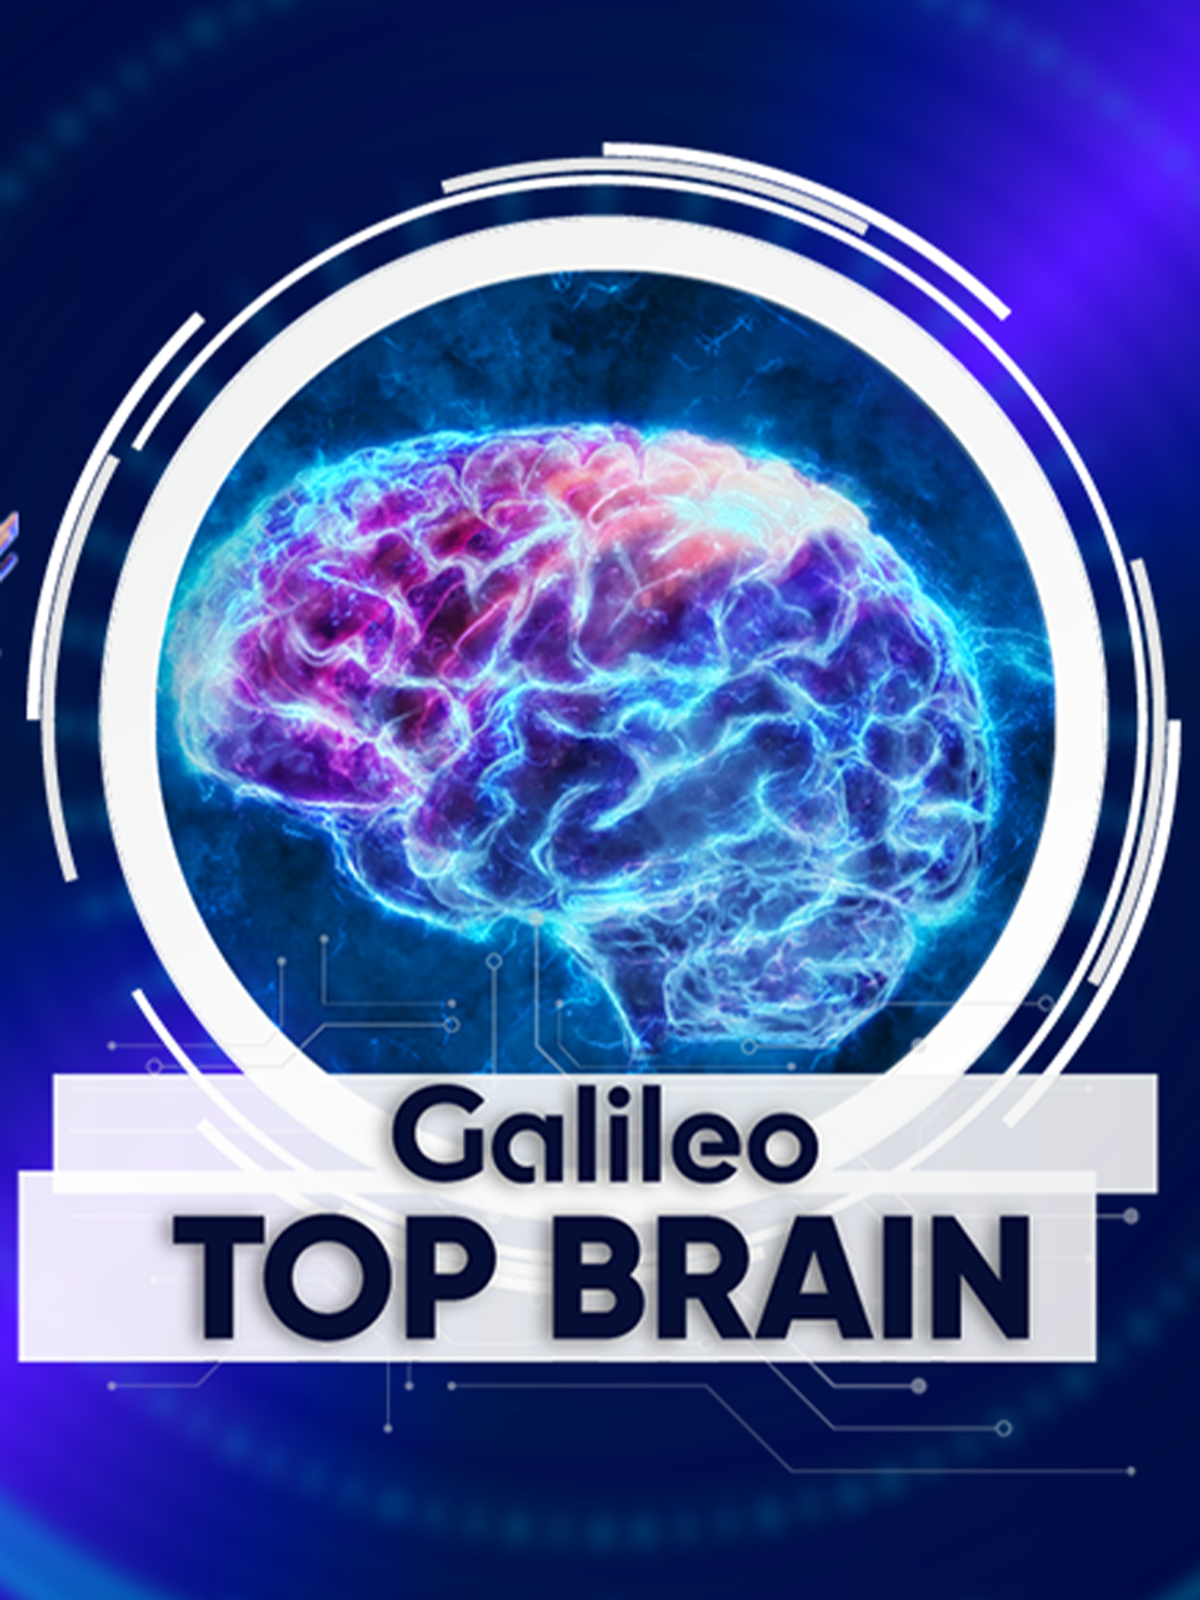 Galileo Top Brain